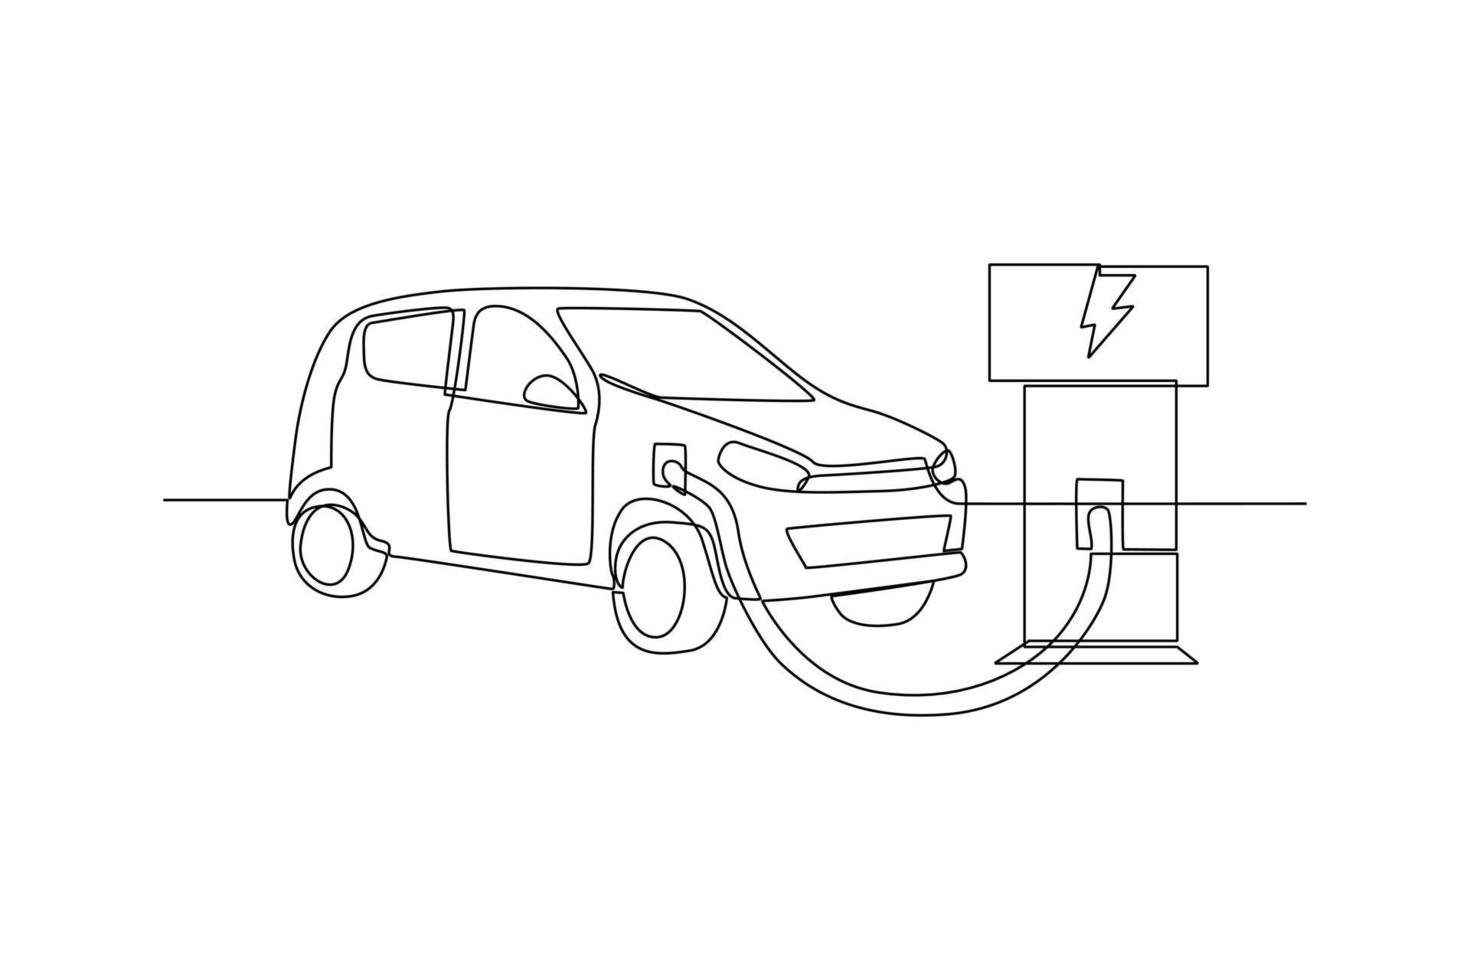 kontinuerlig ett linje teckning elektrisk bil på laddning station. elektrisk bil begrepp. enda linje dra design vektor grafisk illustration.